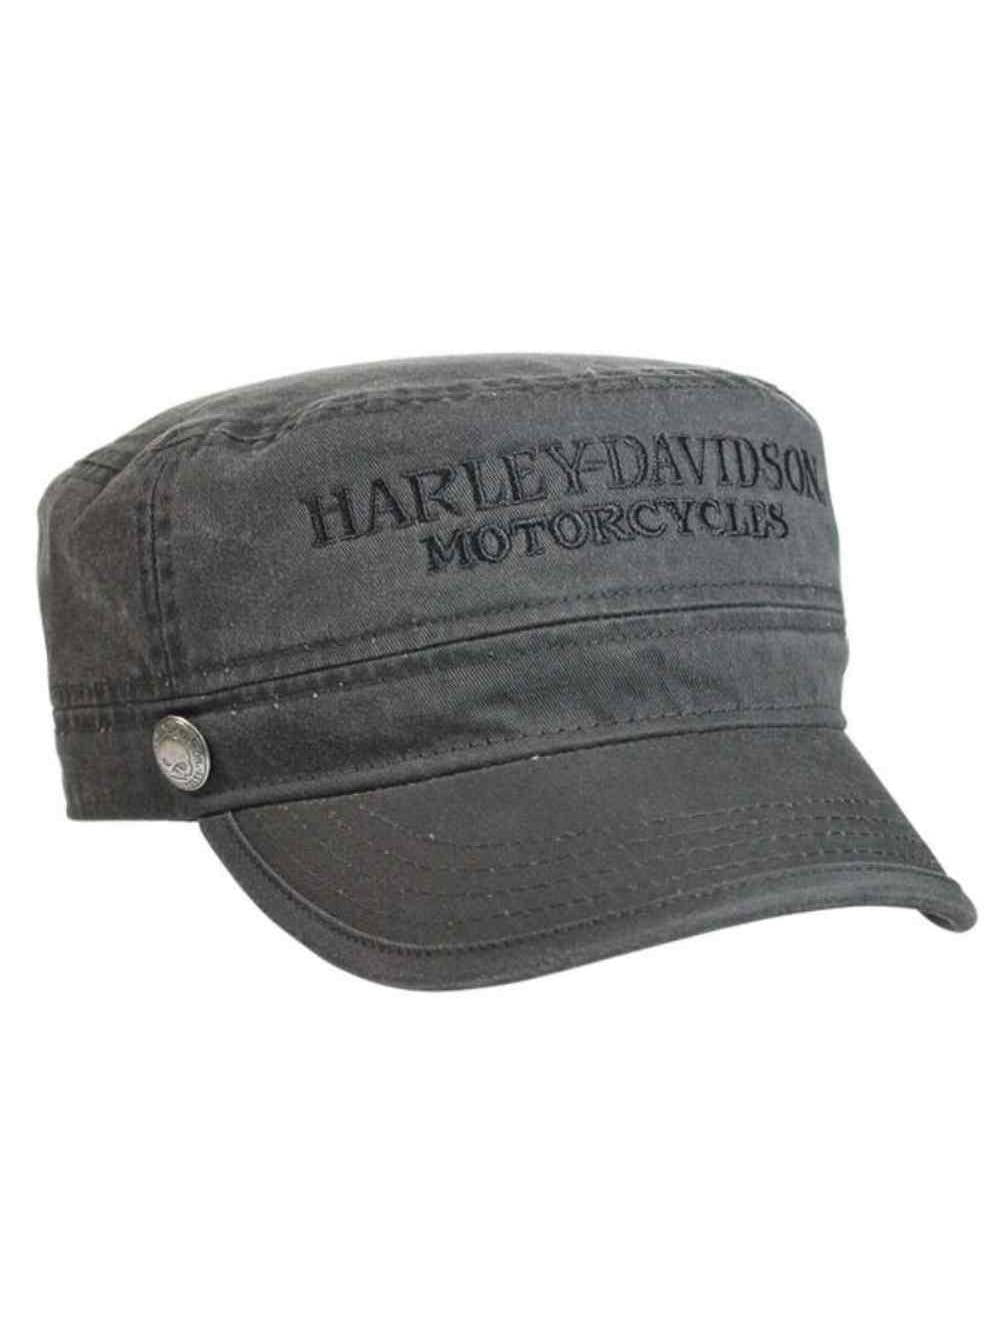 Harley Davidson Patented Enameled Jacket Hat Cap Pin Rare Color Museum Edition 